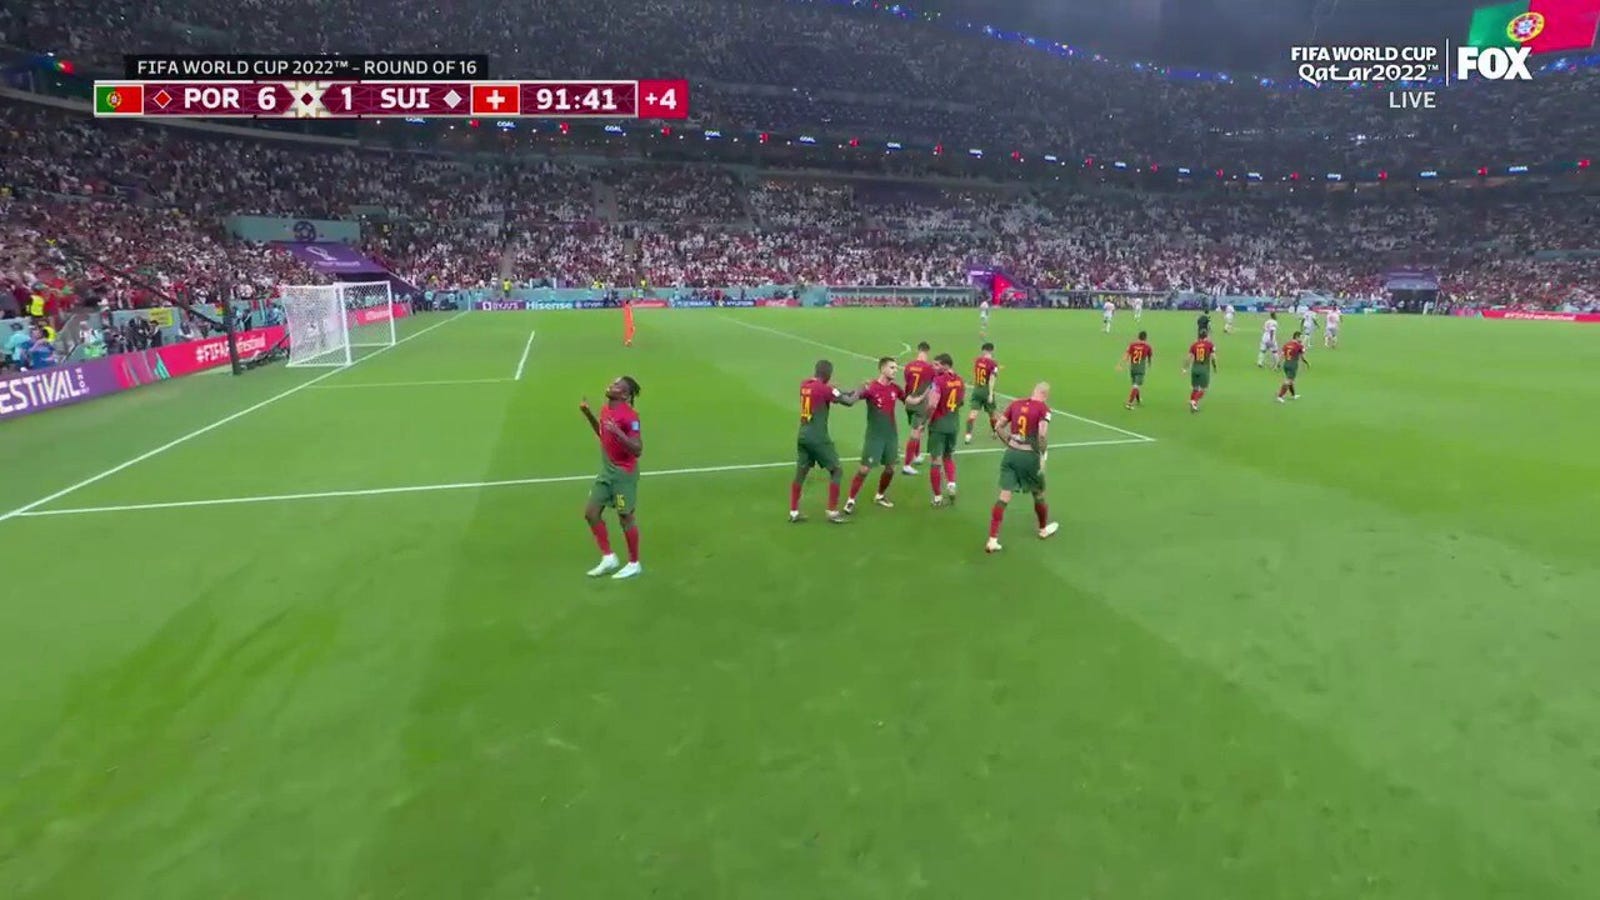 Portugal's Rafael Leao scores a goal against Switzerland 90 + 2'